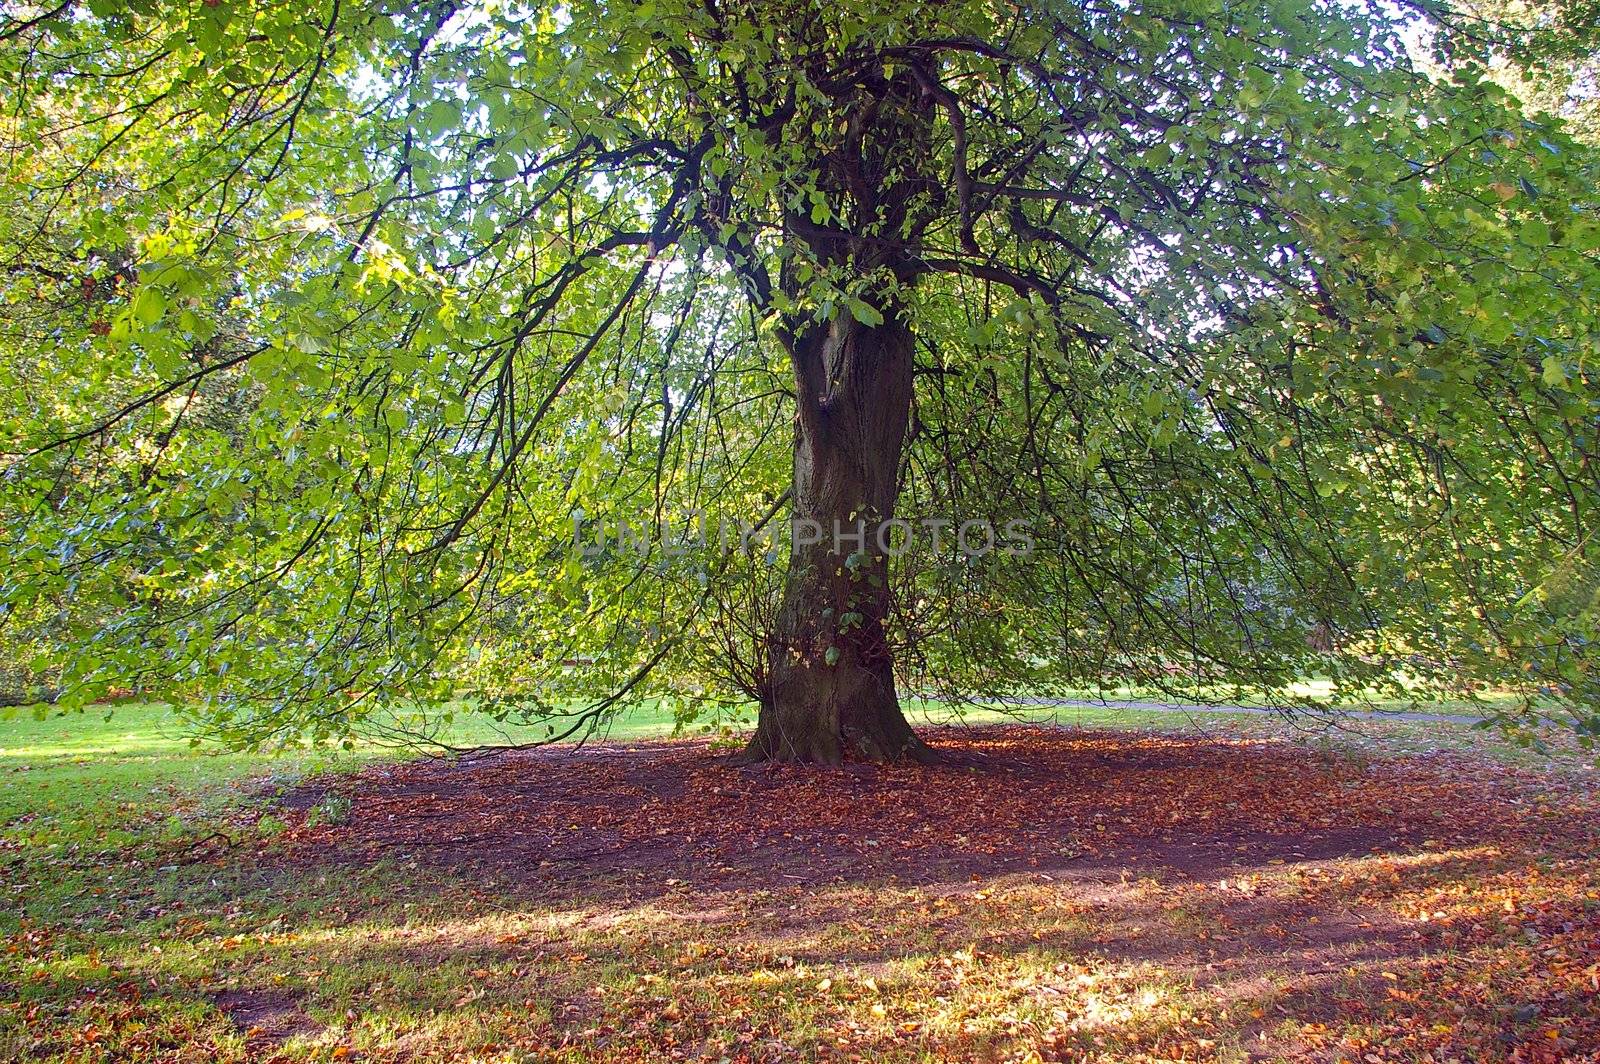 Leaves on tree in Dunham park, Cheshire, UK.